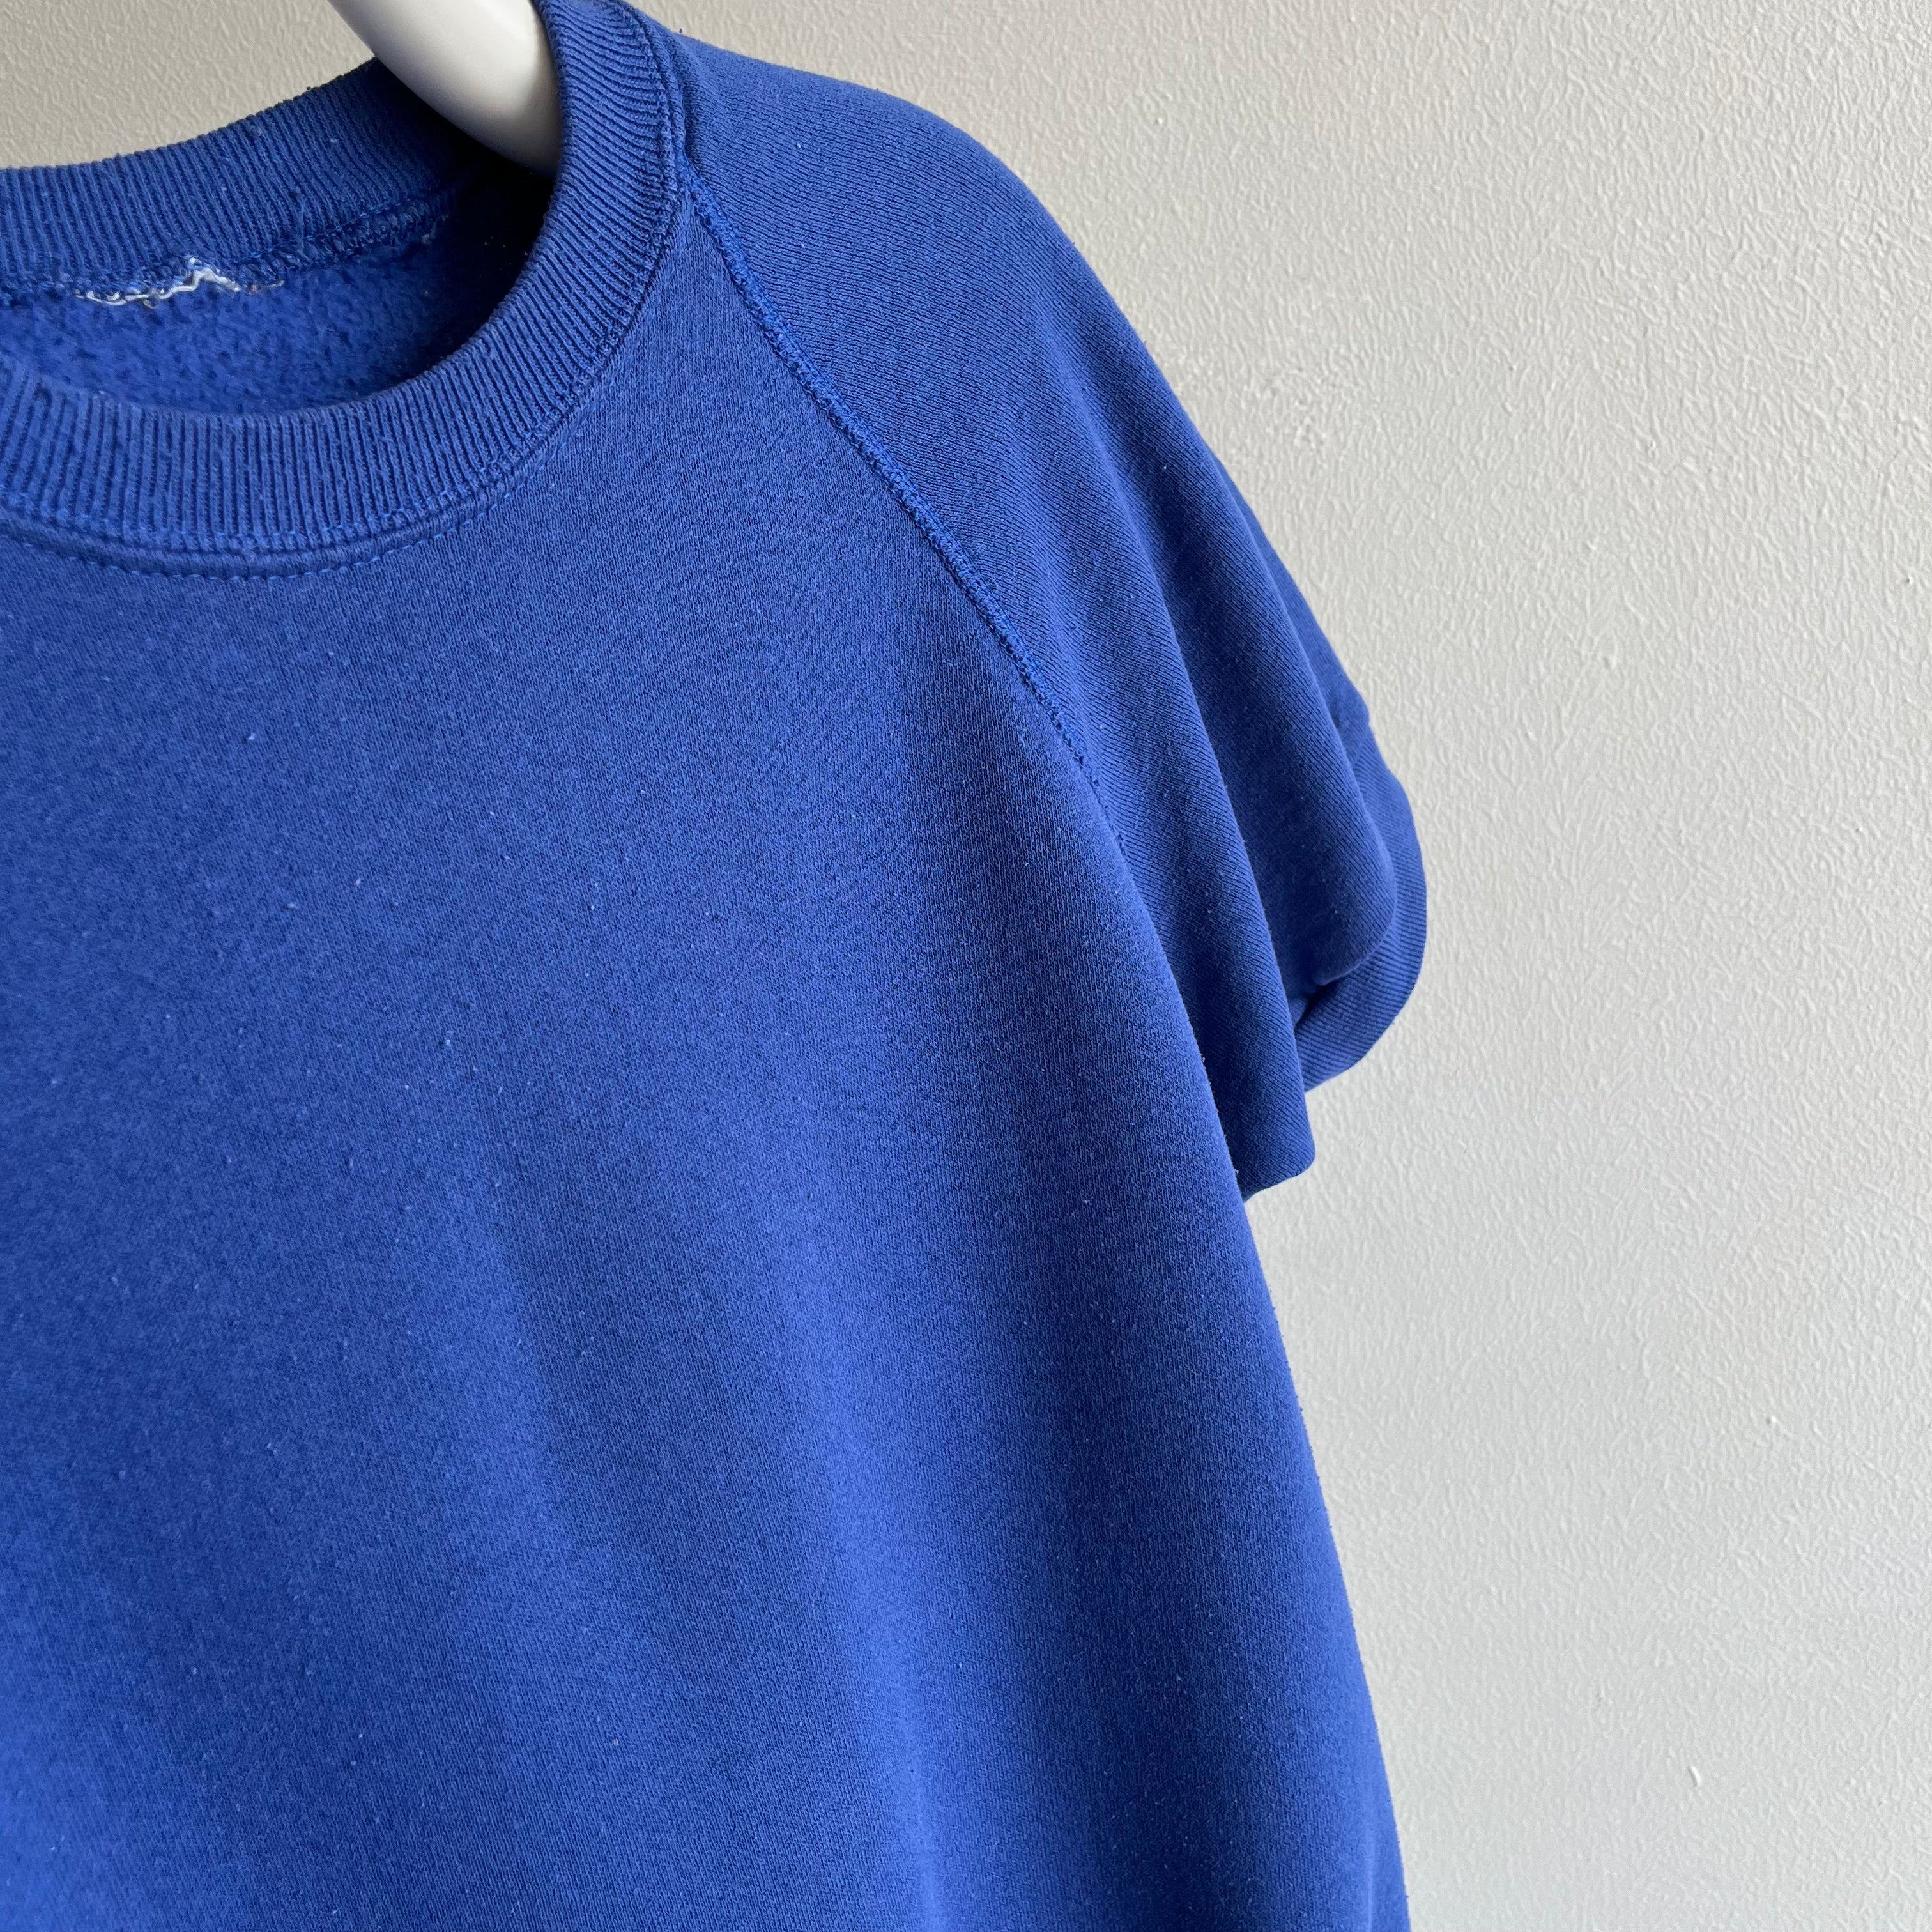 1980s Blank Blue Warm Up Sweatshirt